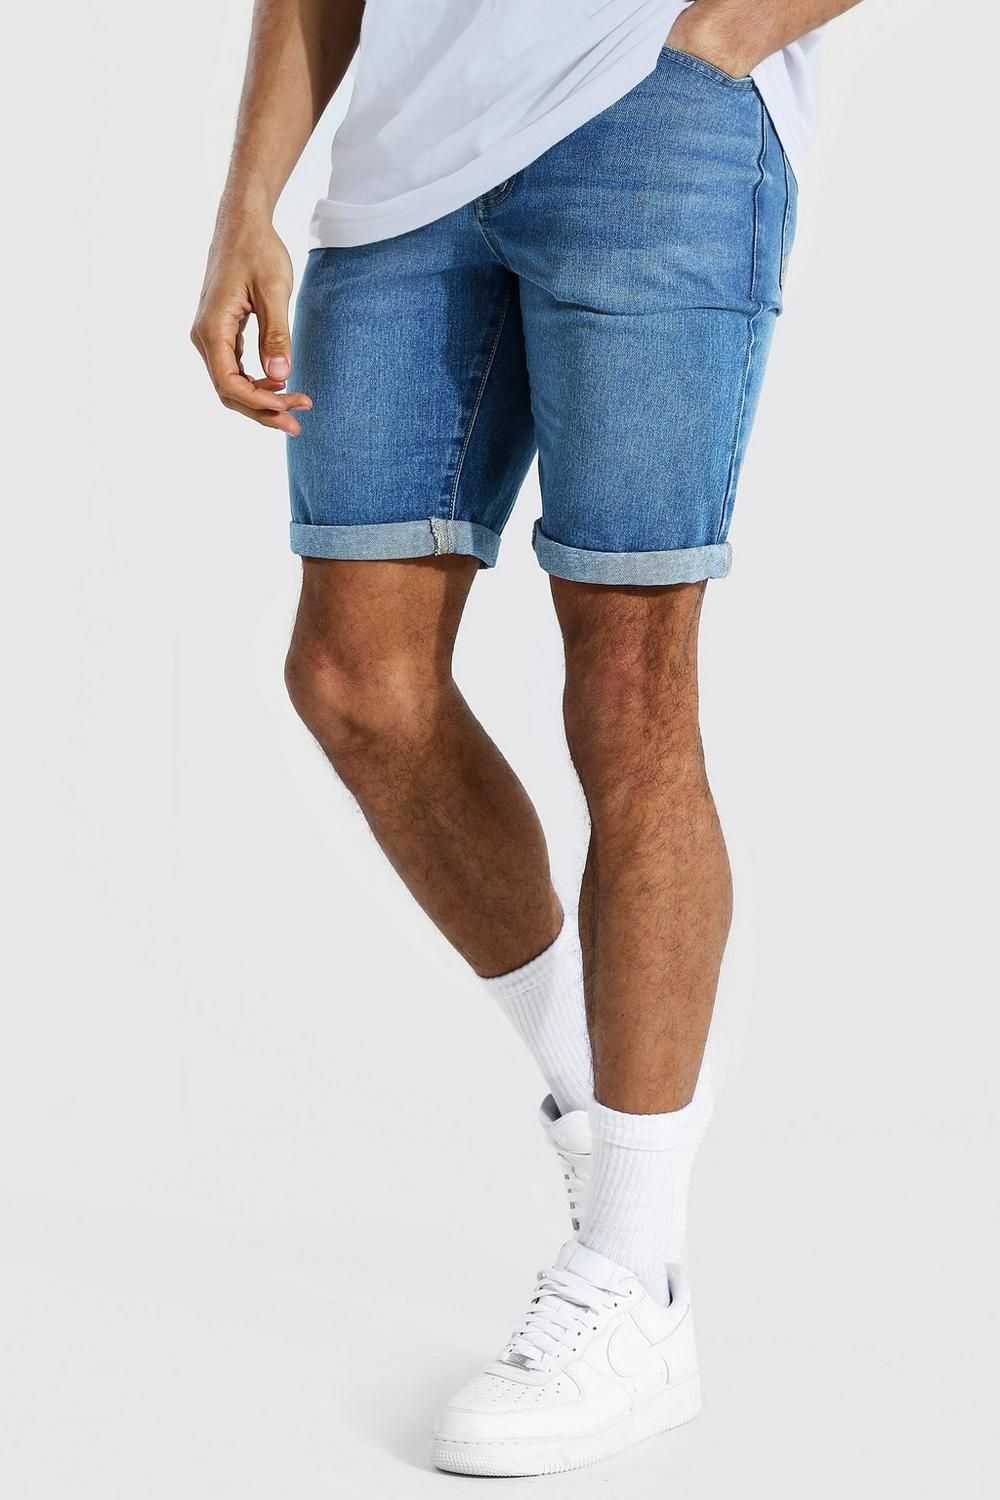 COMING SOON Size: 30R Mid Blue Slim Rigid Fit Jean Shorts